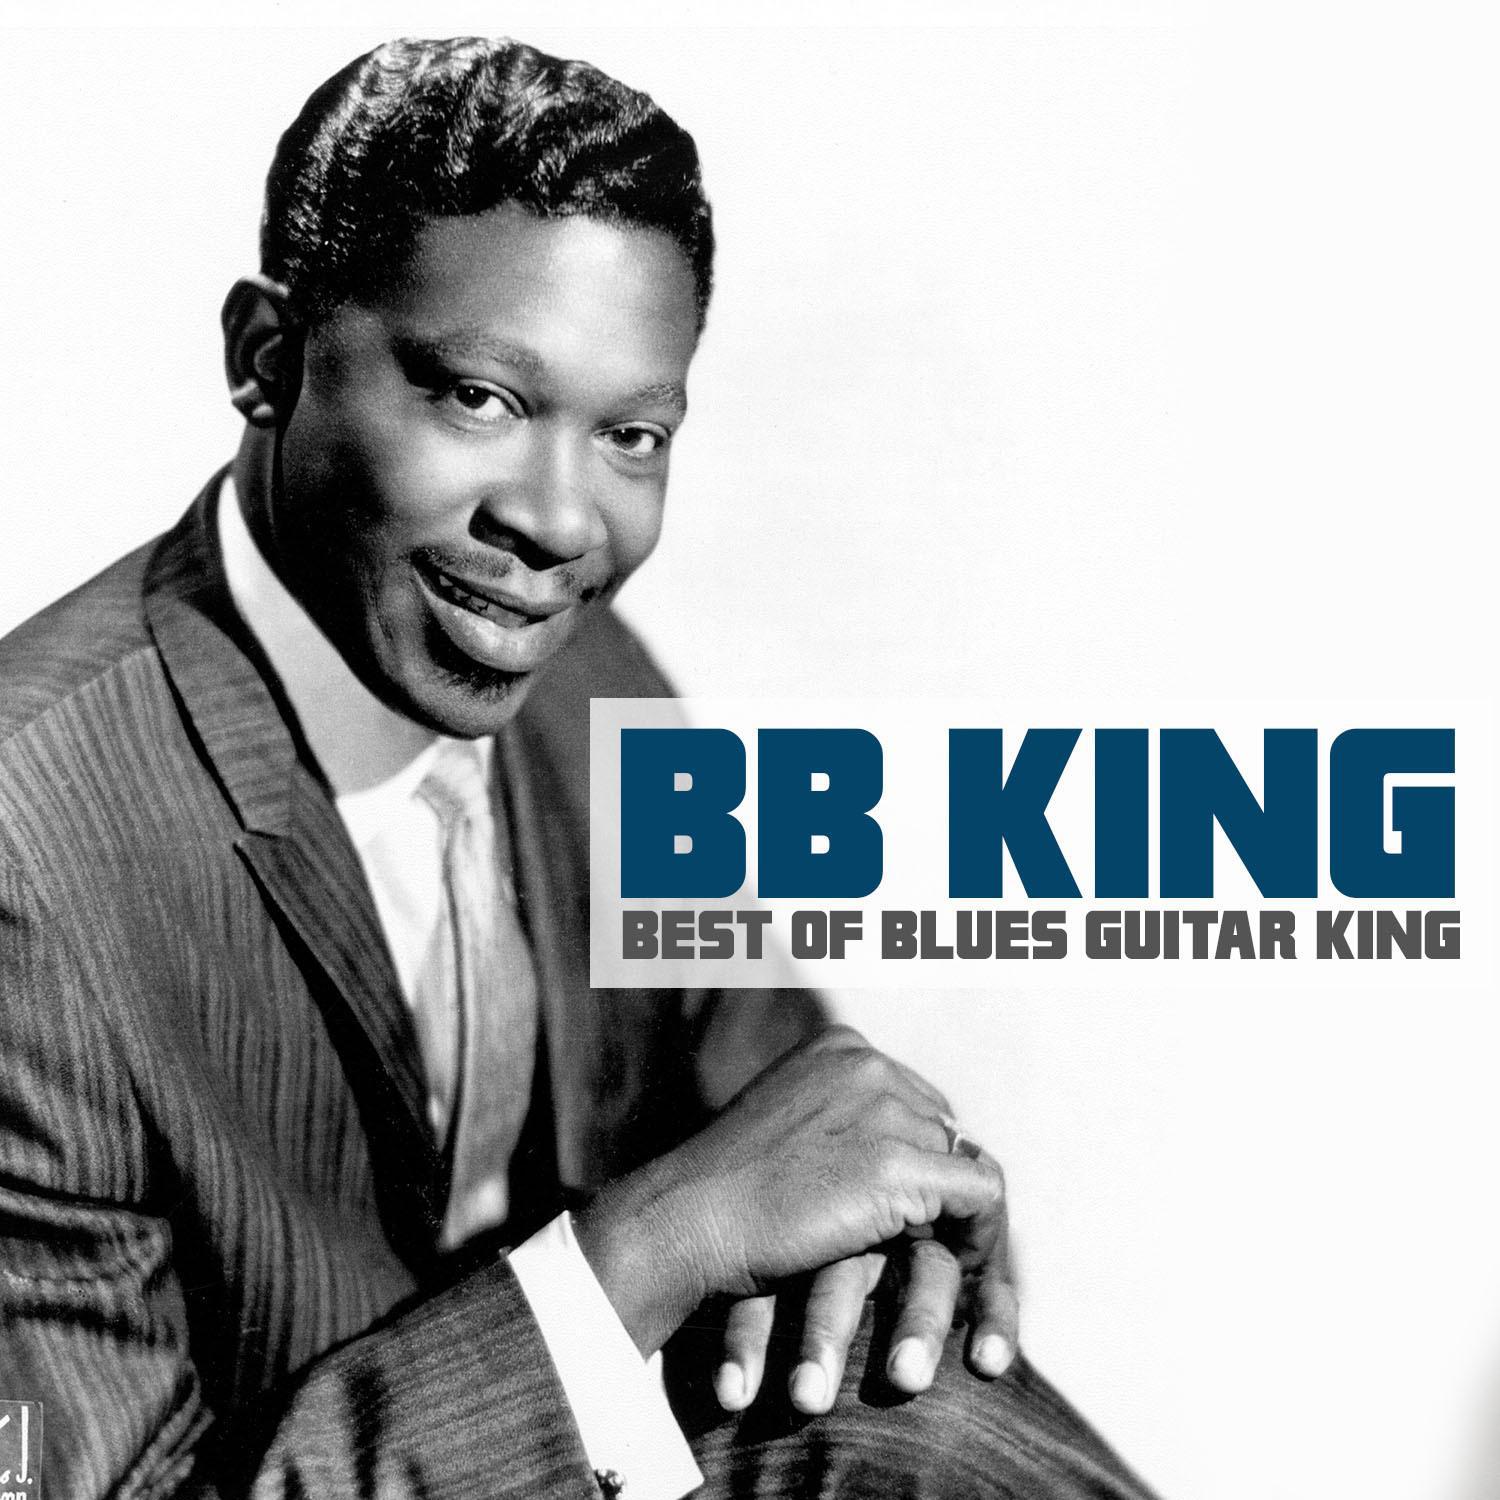 Best of Blues Guitar King